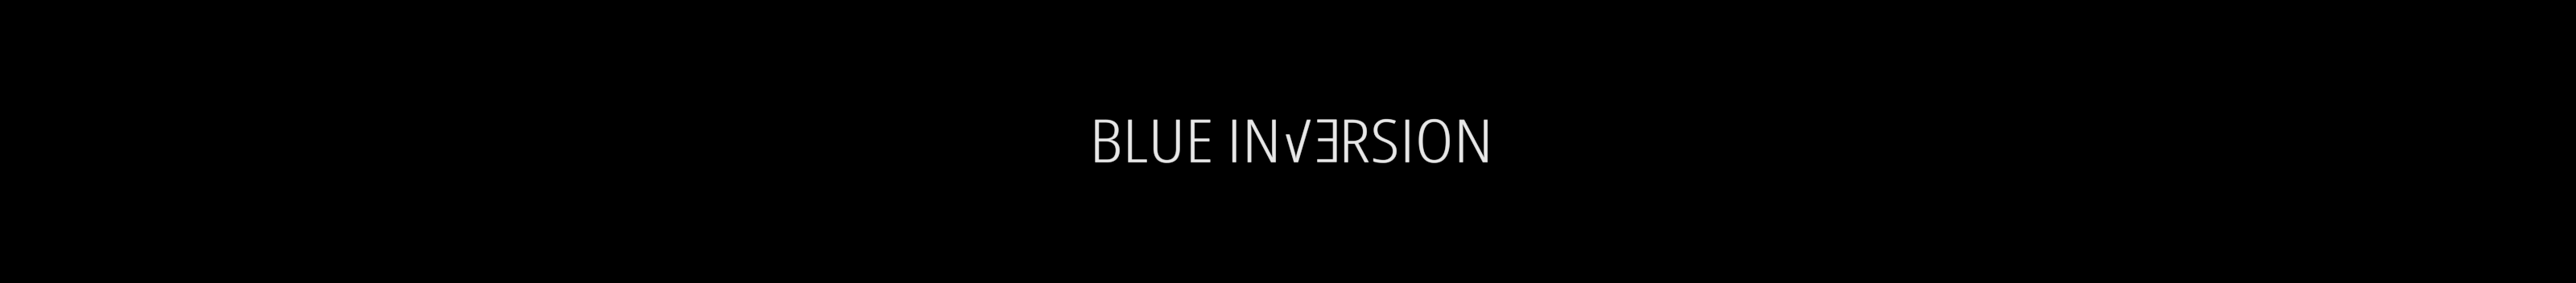 Blue Inversions profilbanner